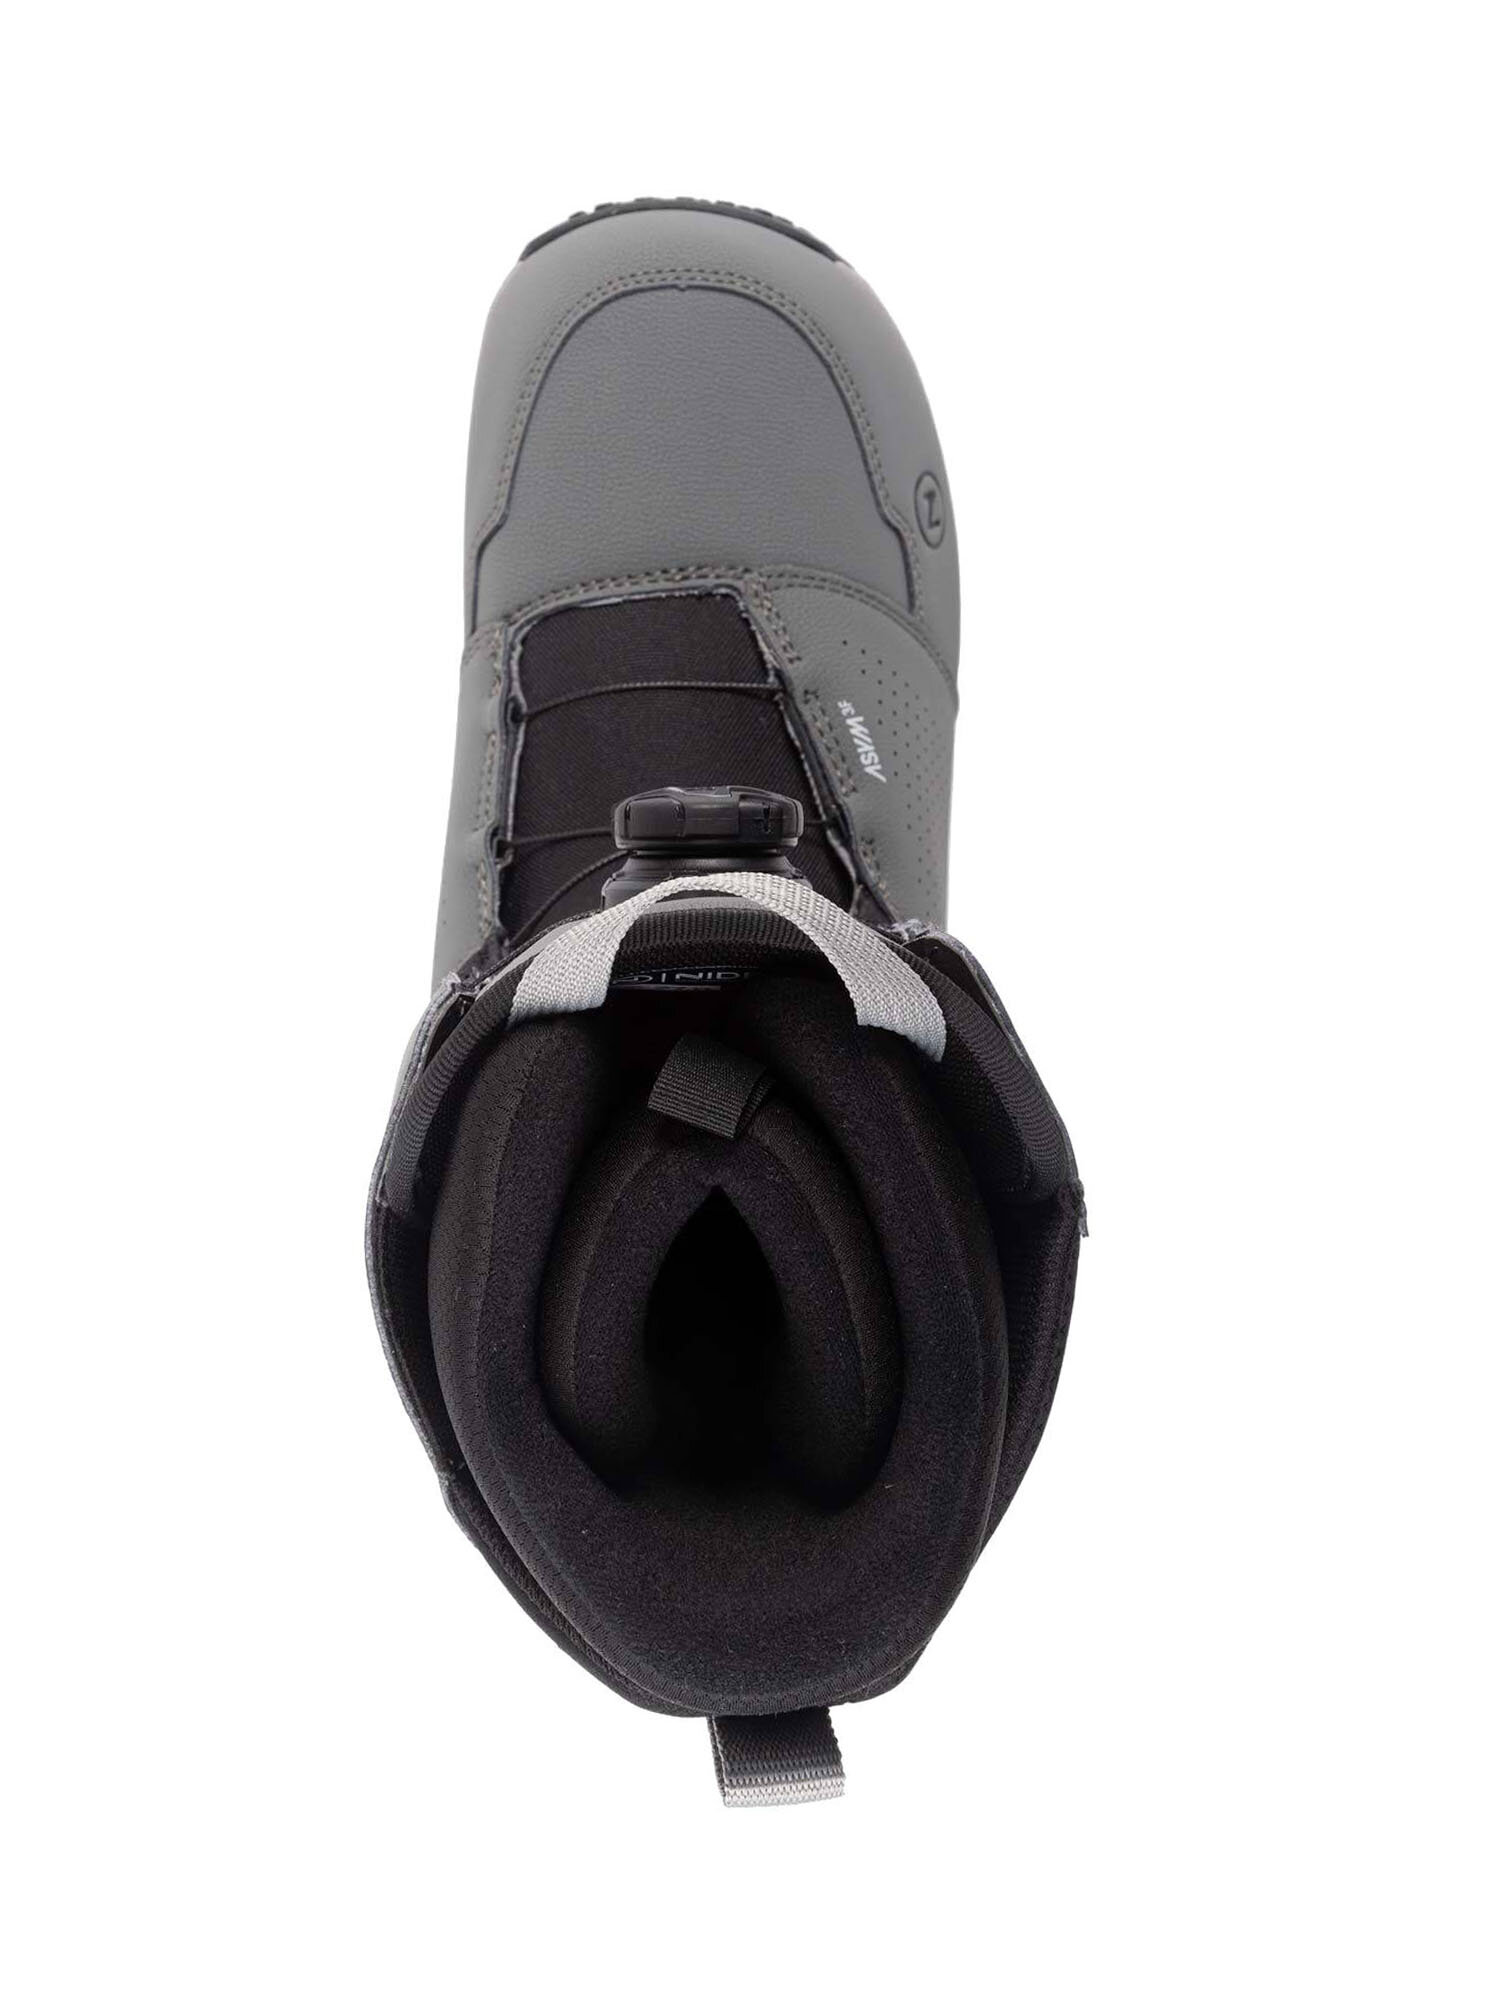 Ботинки для сноуборда NIDECKER Cascade Gray (US:7,5)